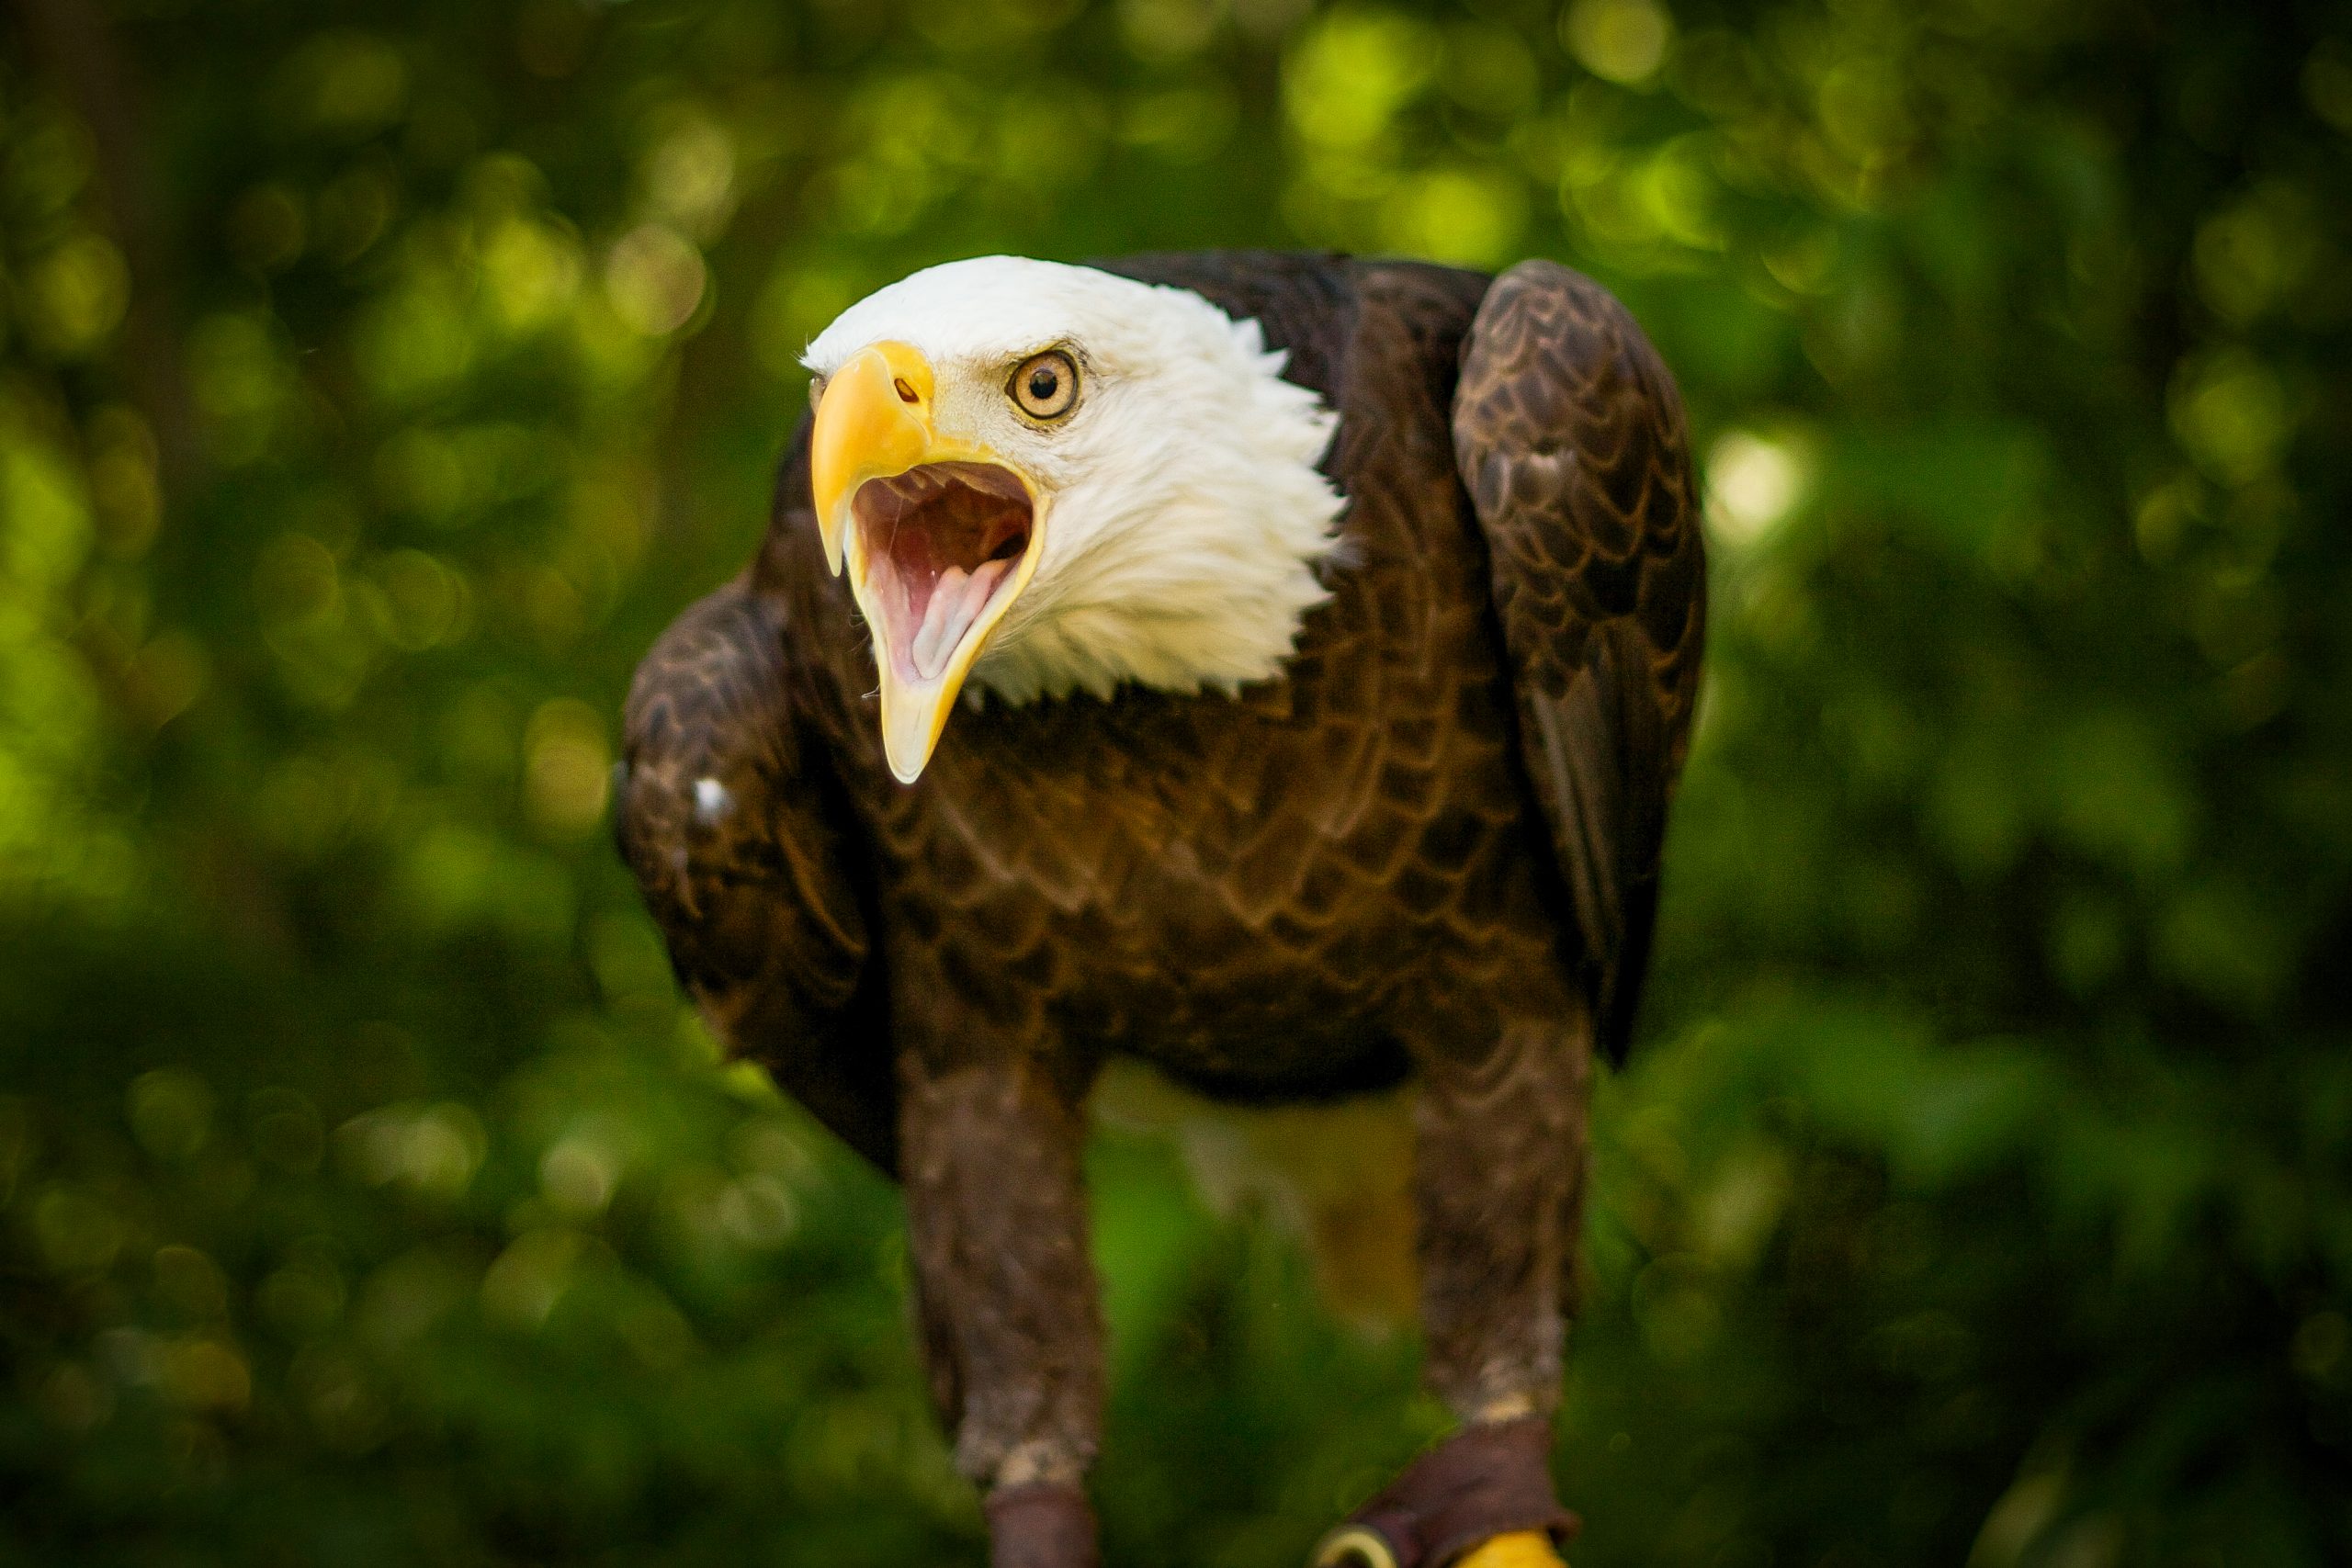 MEET OUR BIRDS | American Eagle Foundation